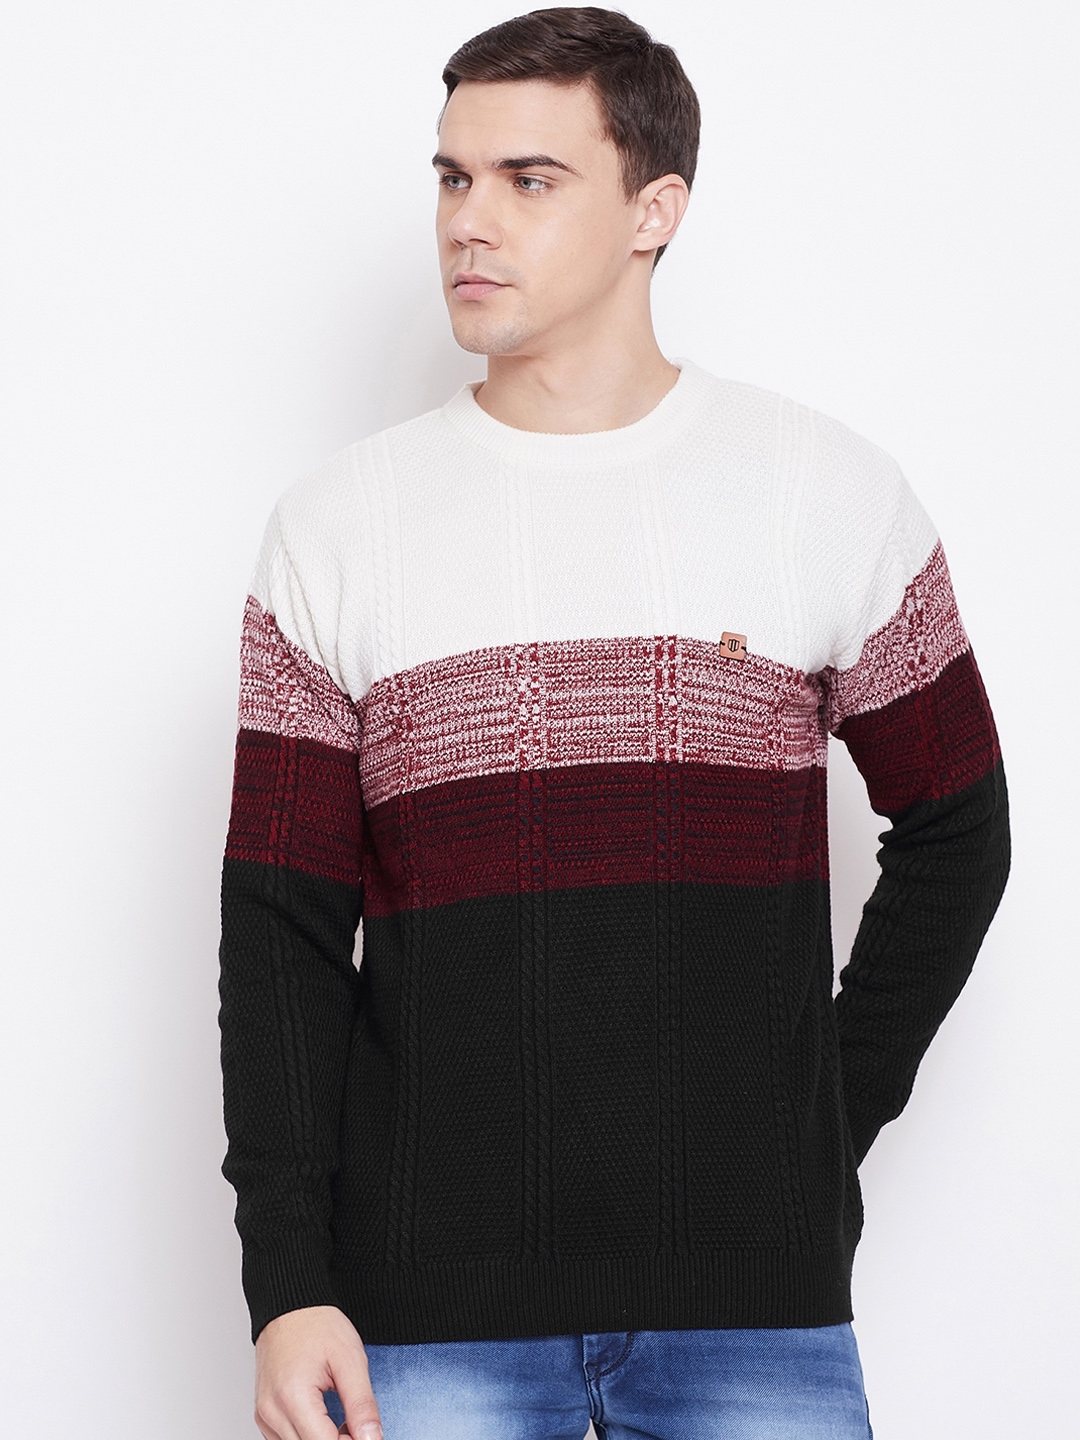 mens pullover sweater inspo